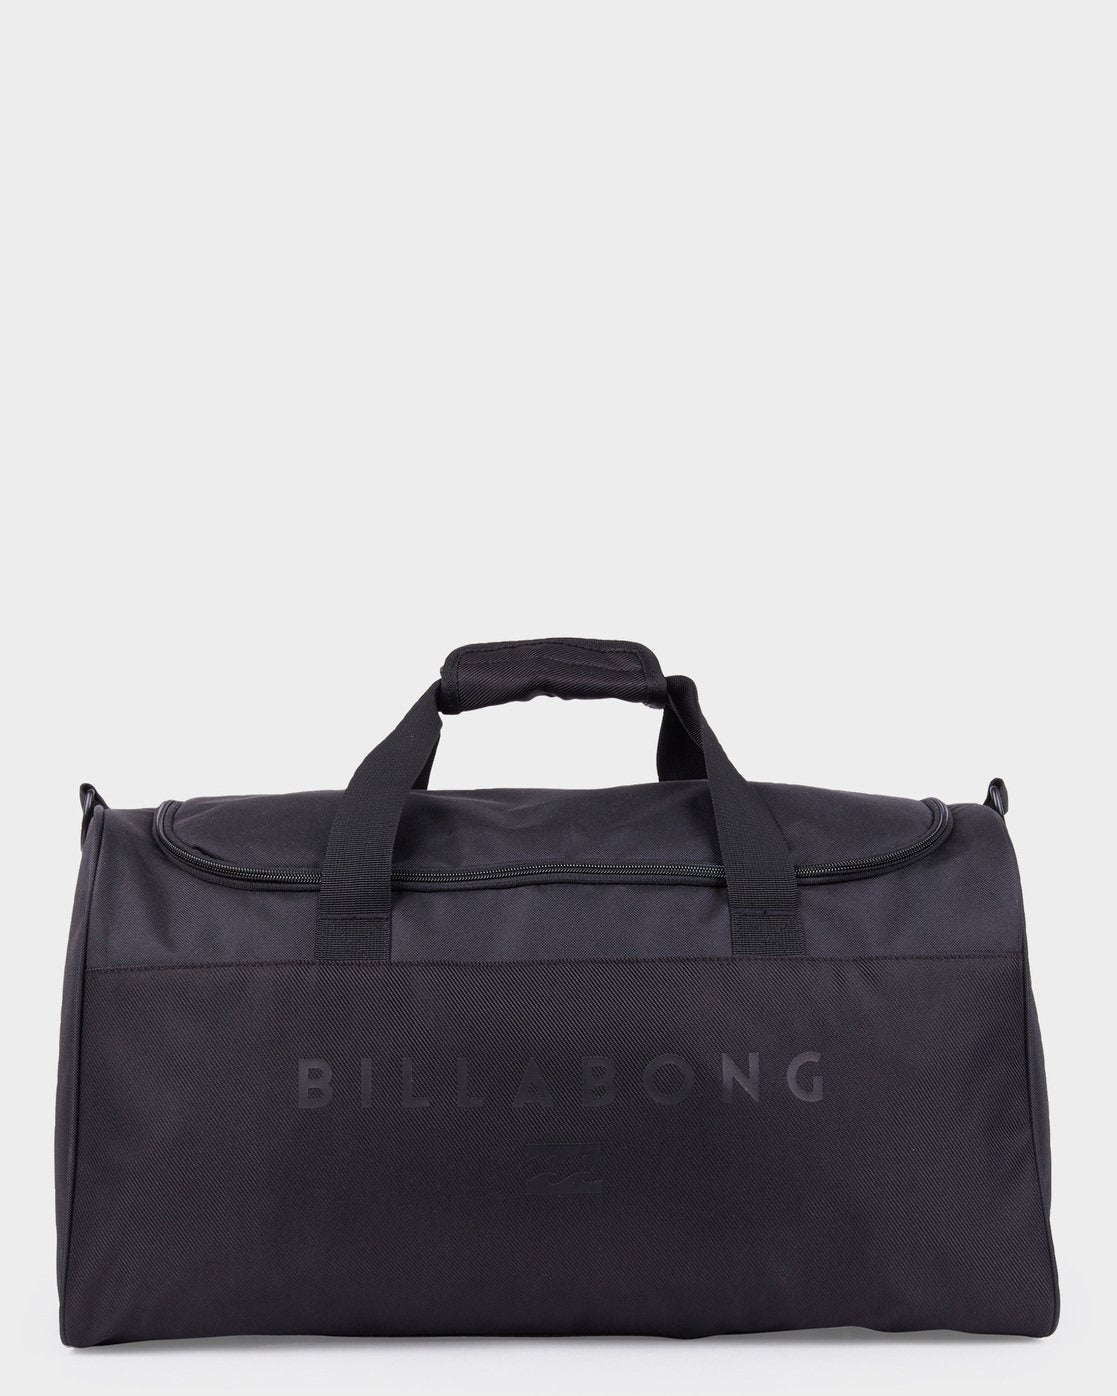 Billabong Weekender Travel Bag